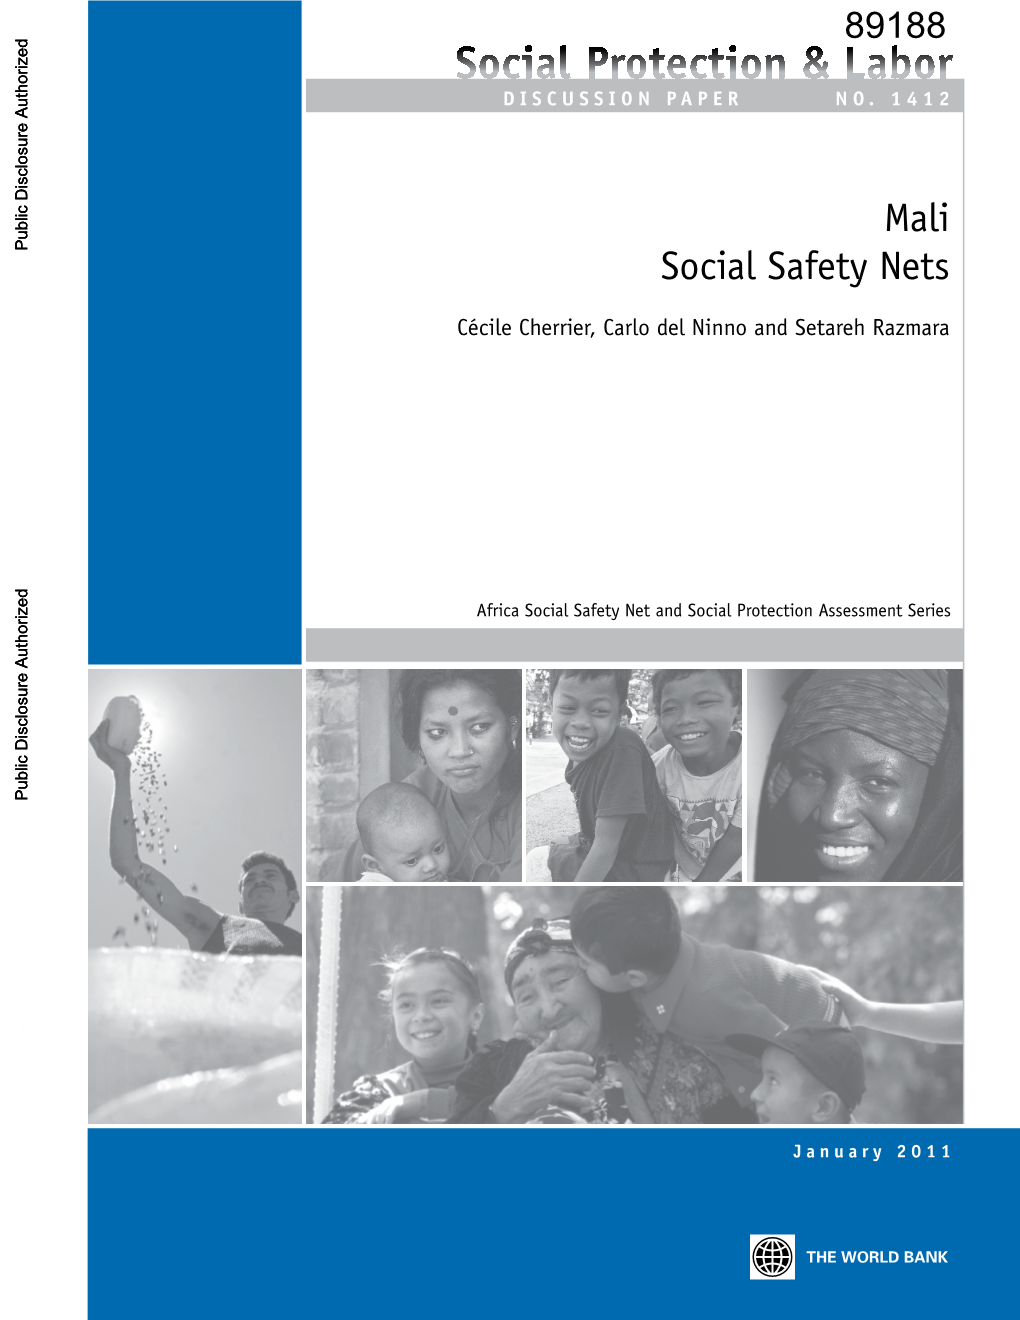 Mali Social Safety Nets by Cécile Cherrier, Carlo Del Ninno and Setareh Razmara, January 2011